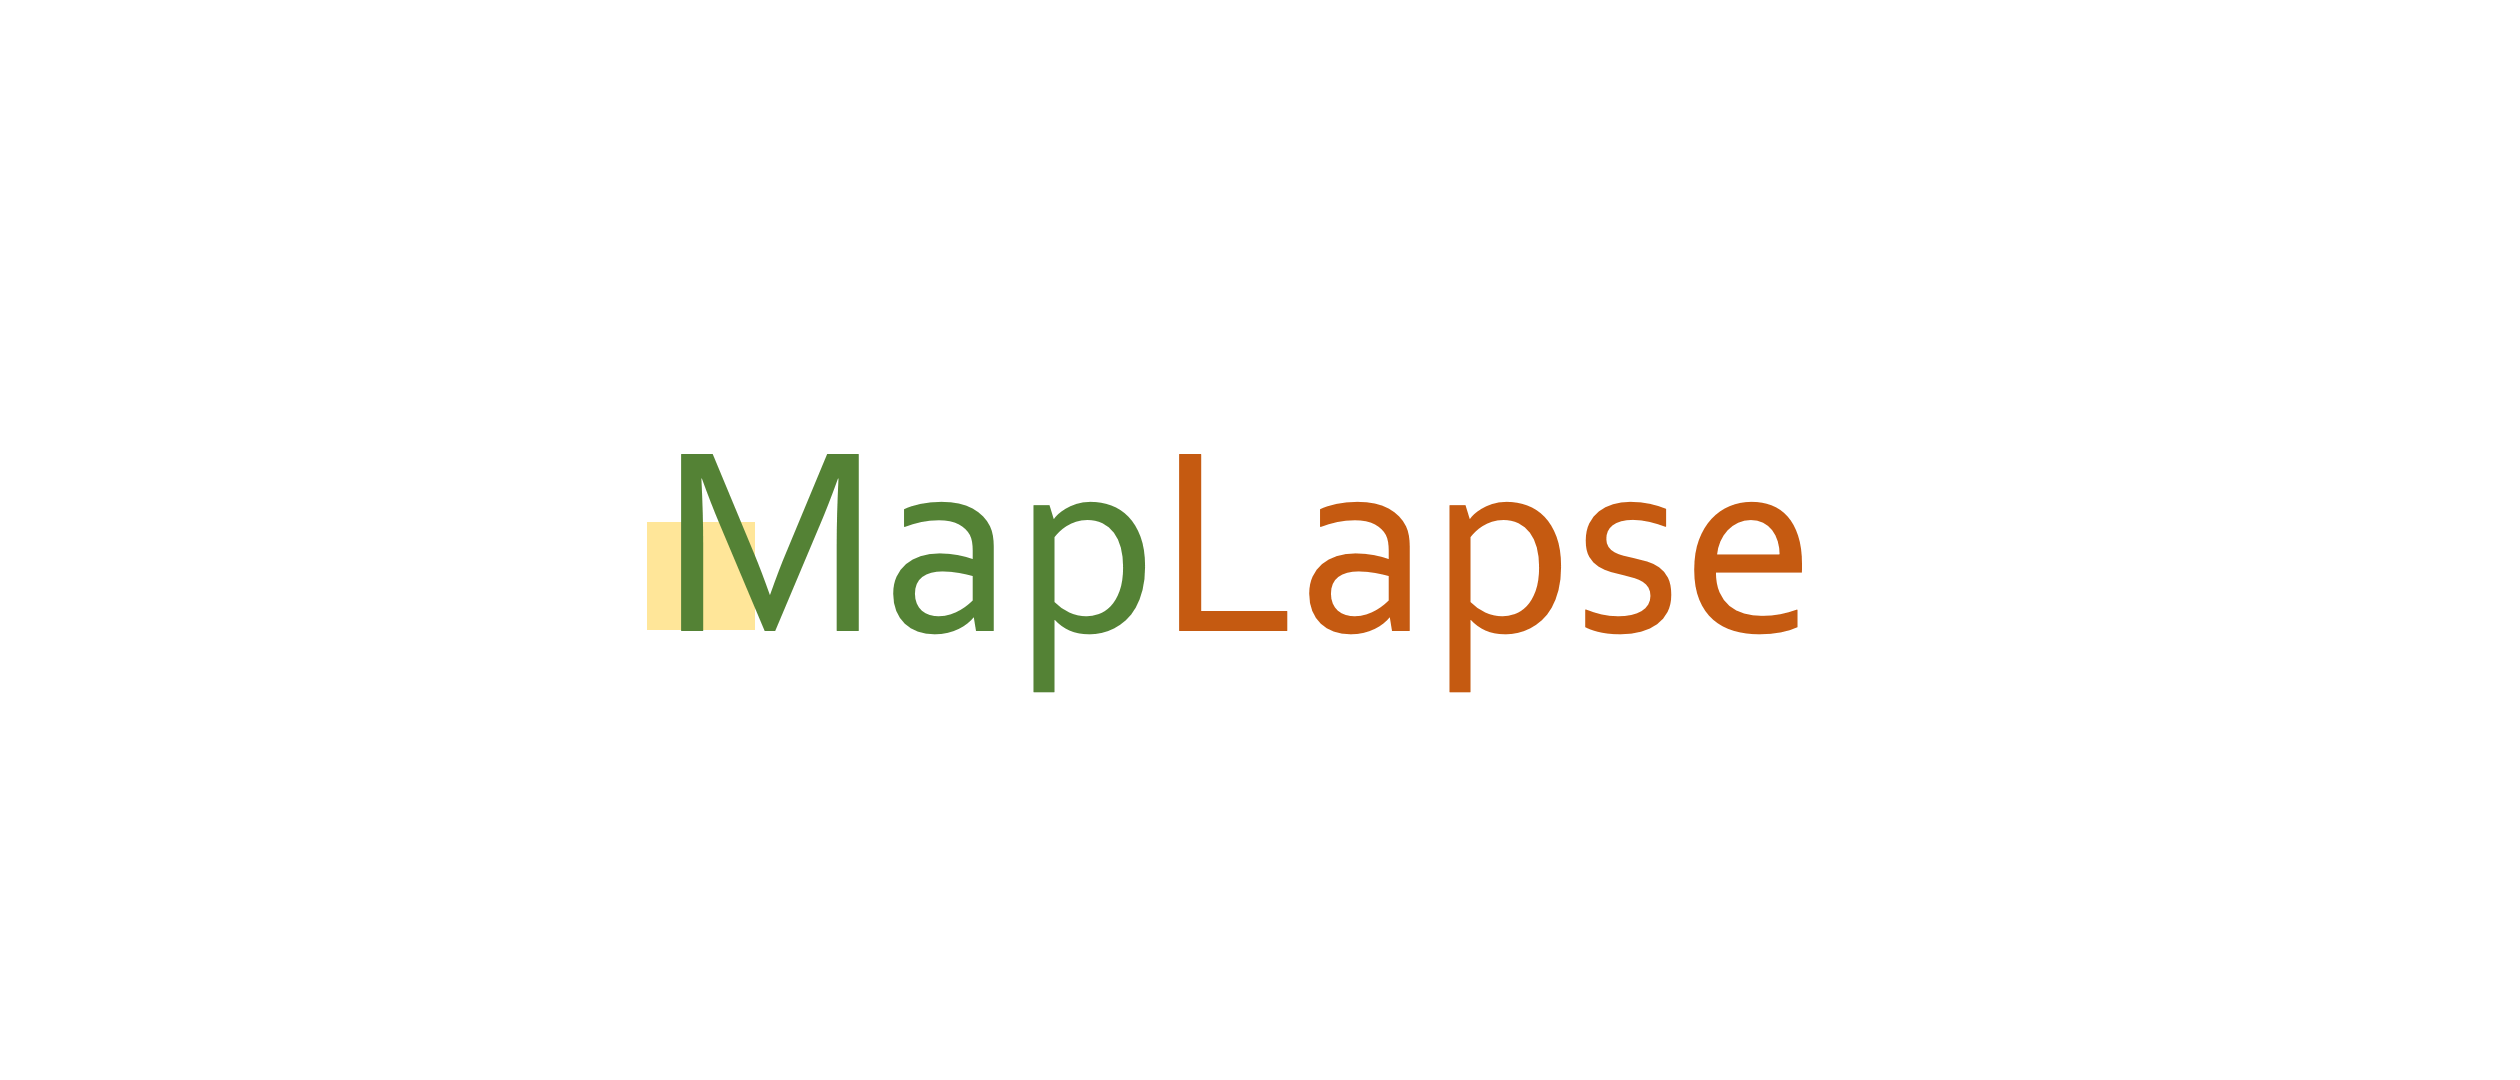 maplapse-logo